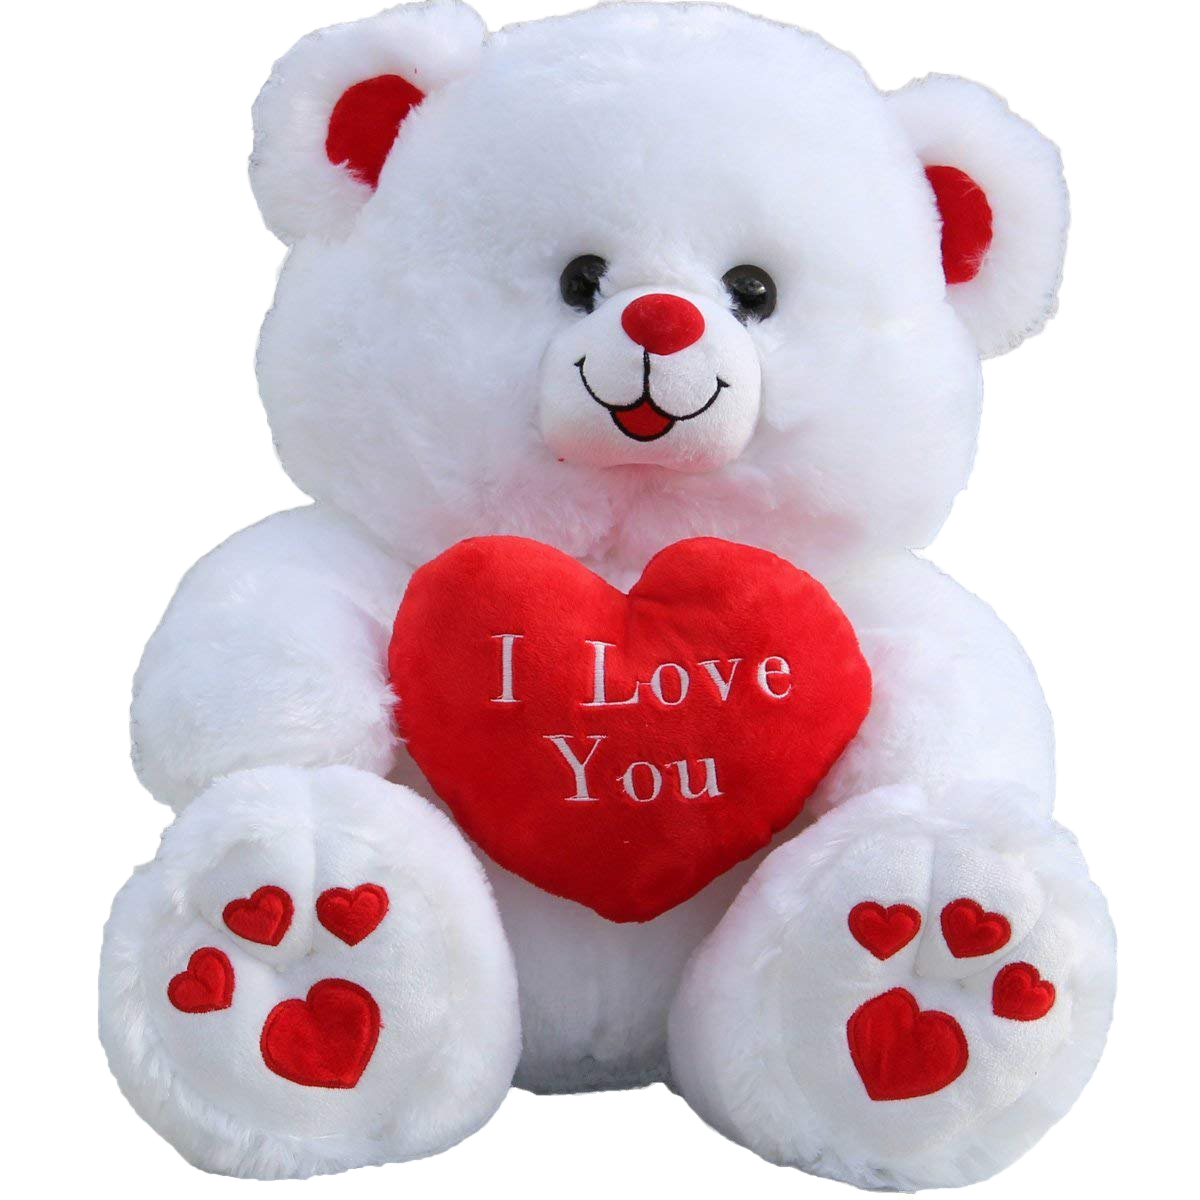 love teddy bear